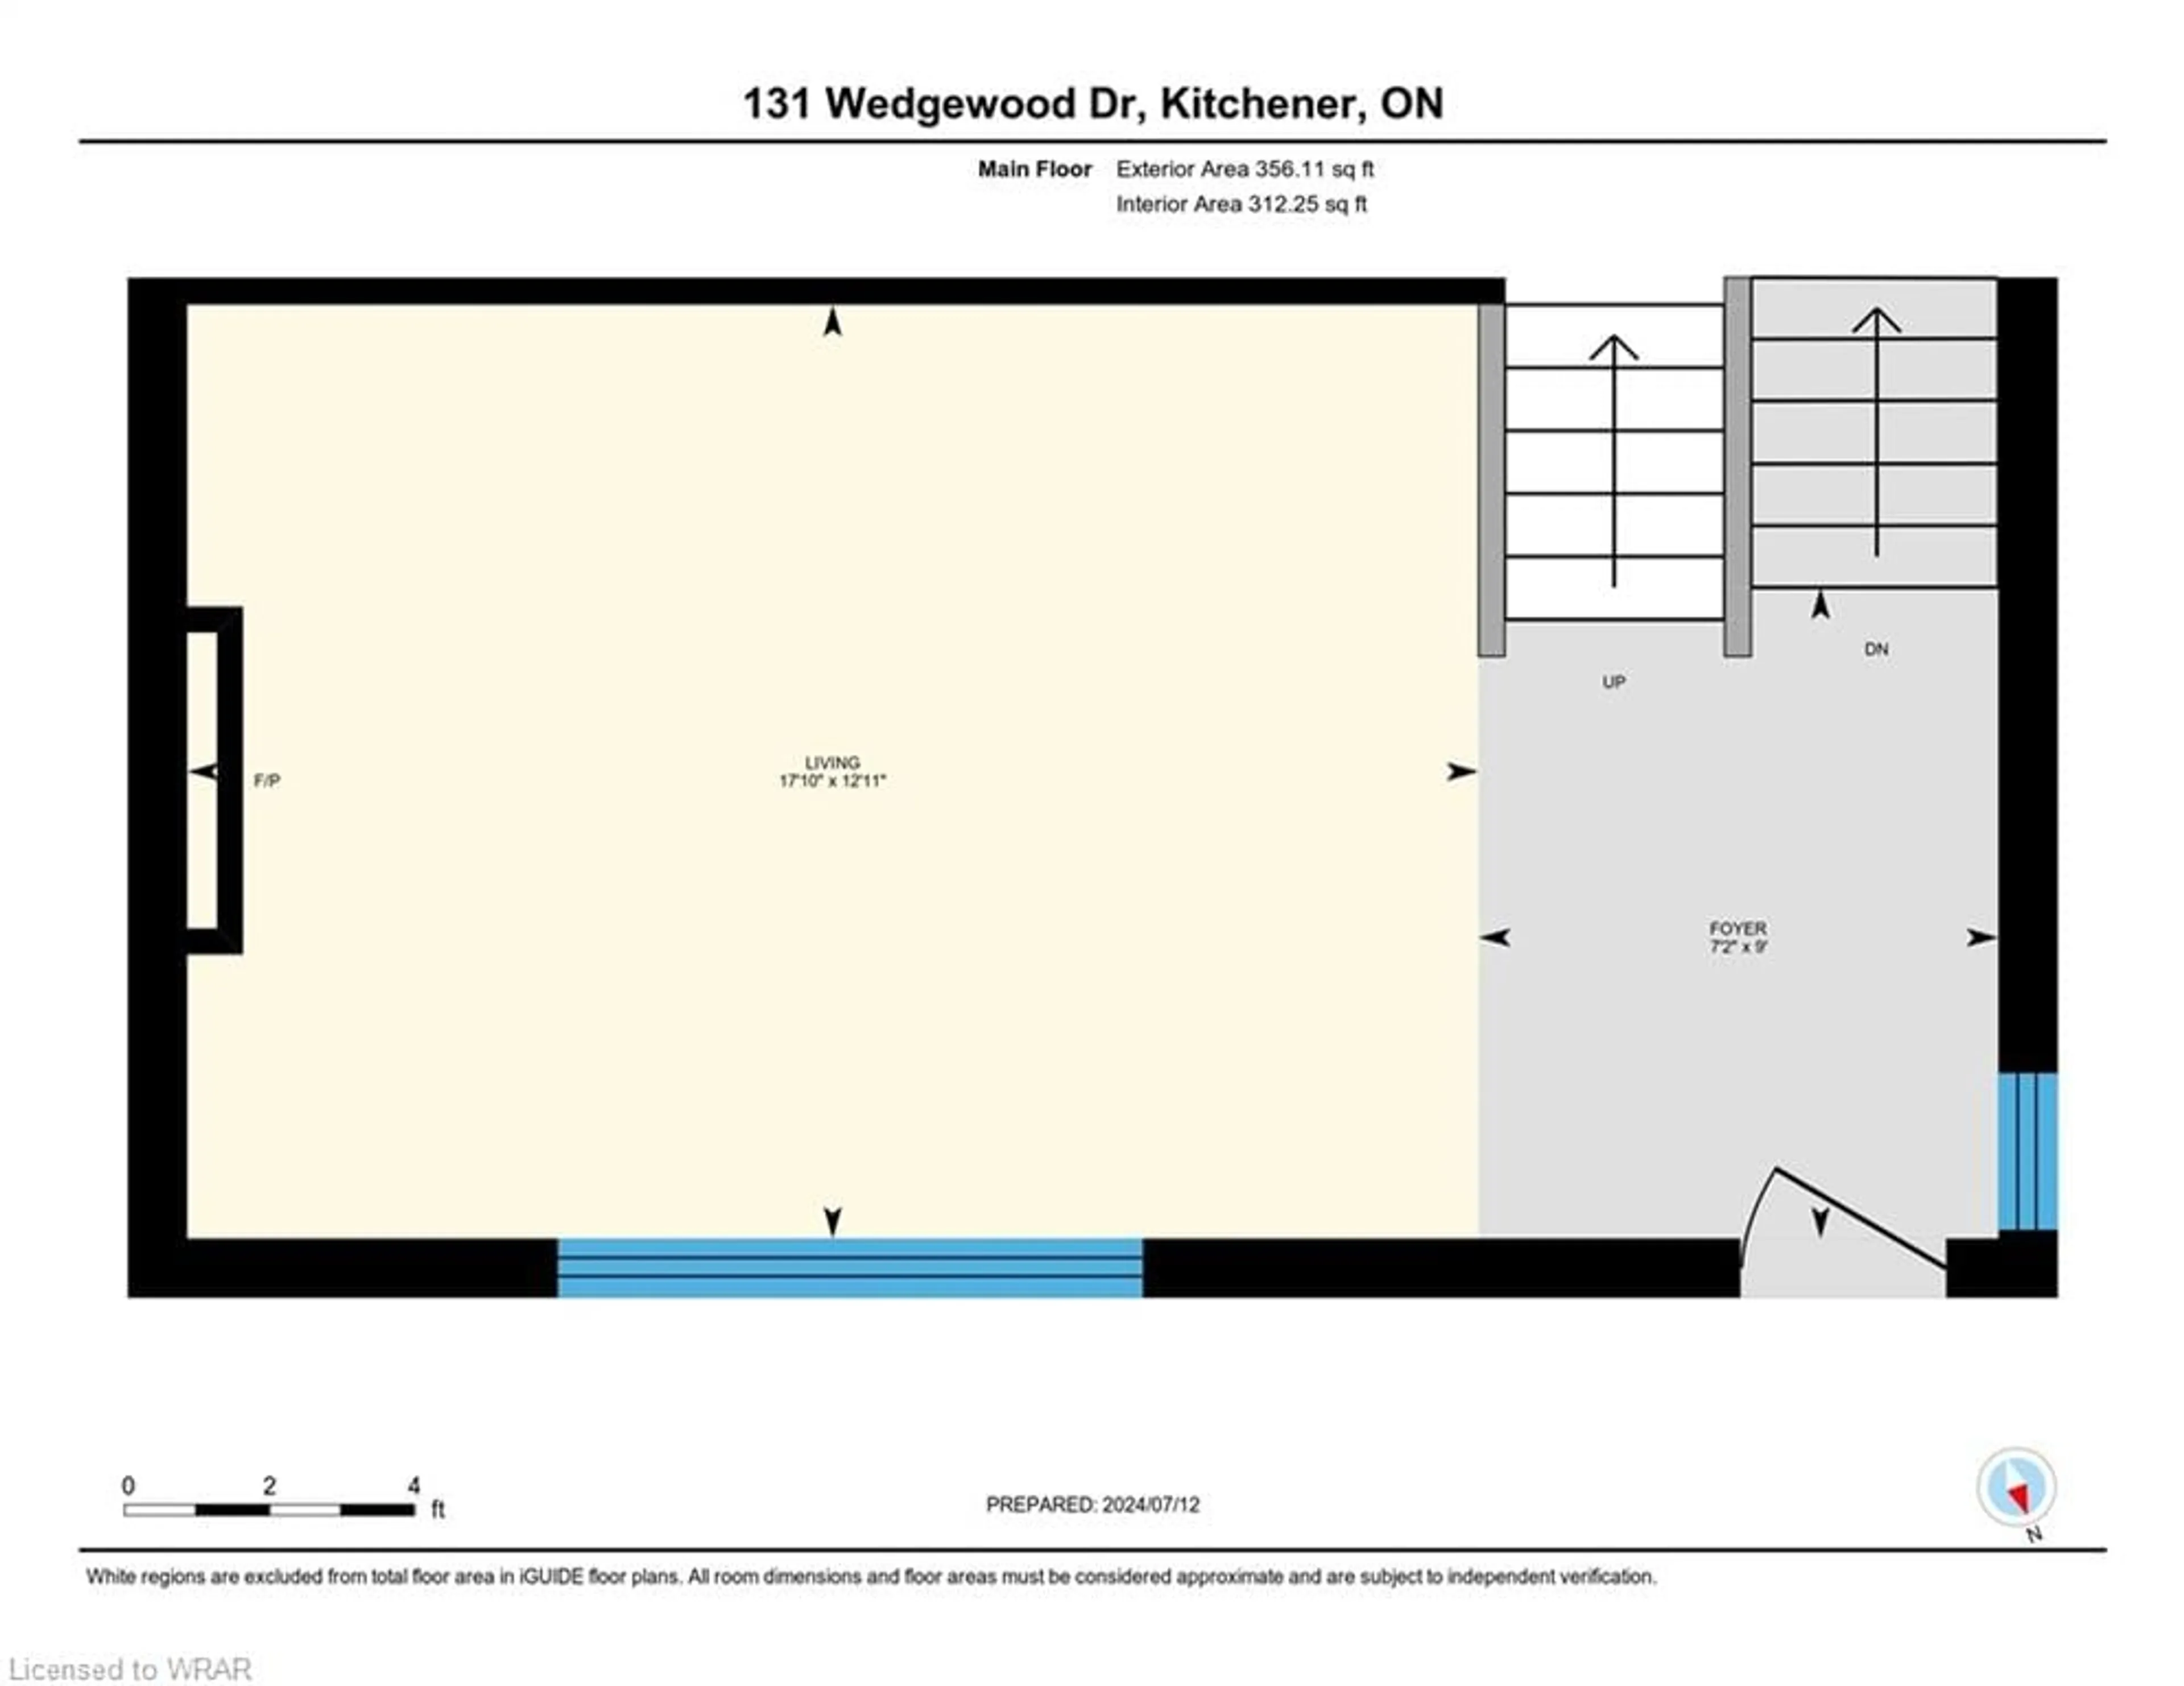 Floor plan for 131 Wedgewood Dr, Kitchener Ontario N2B 1E6